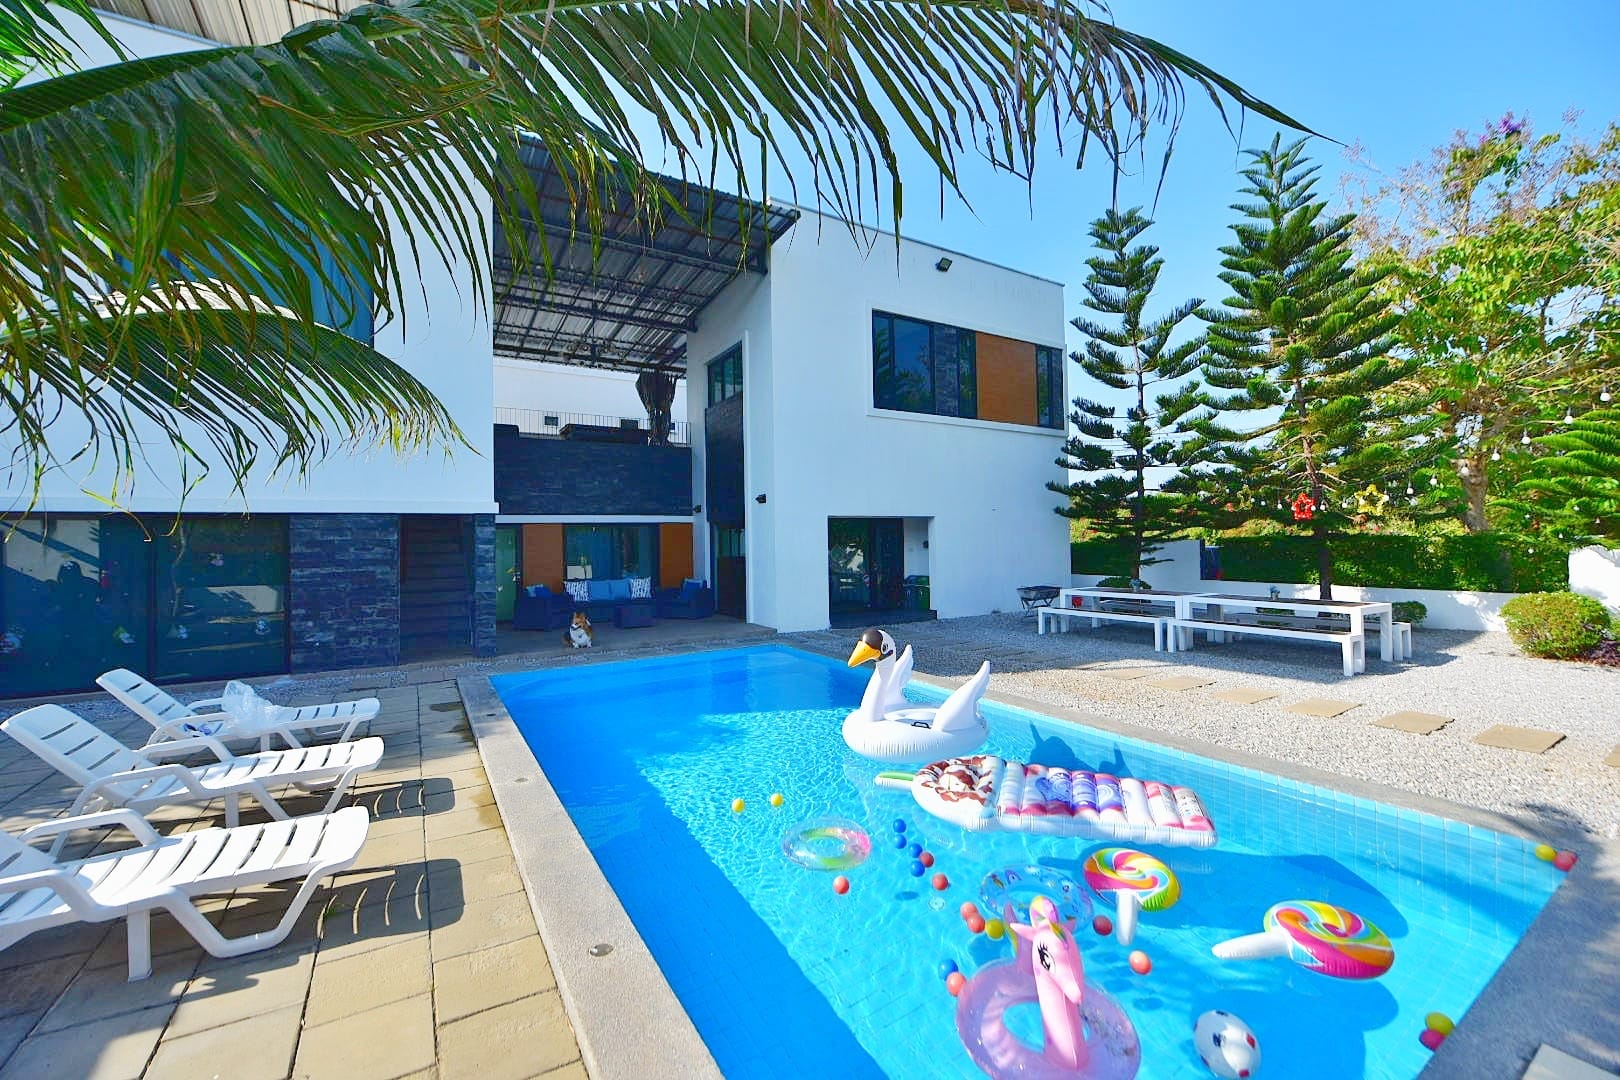 Relax Pool Villa